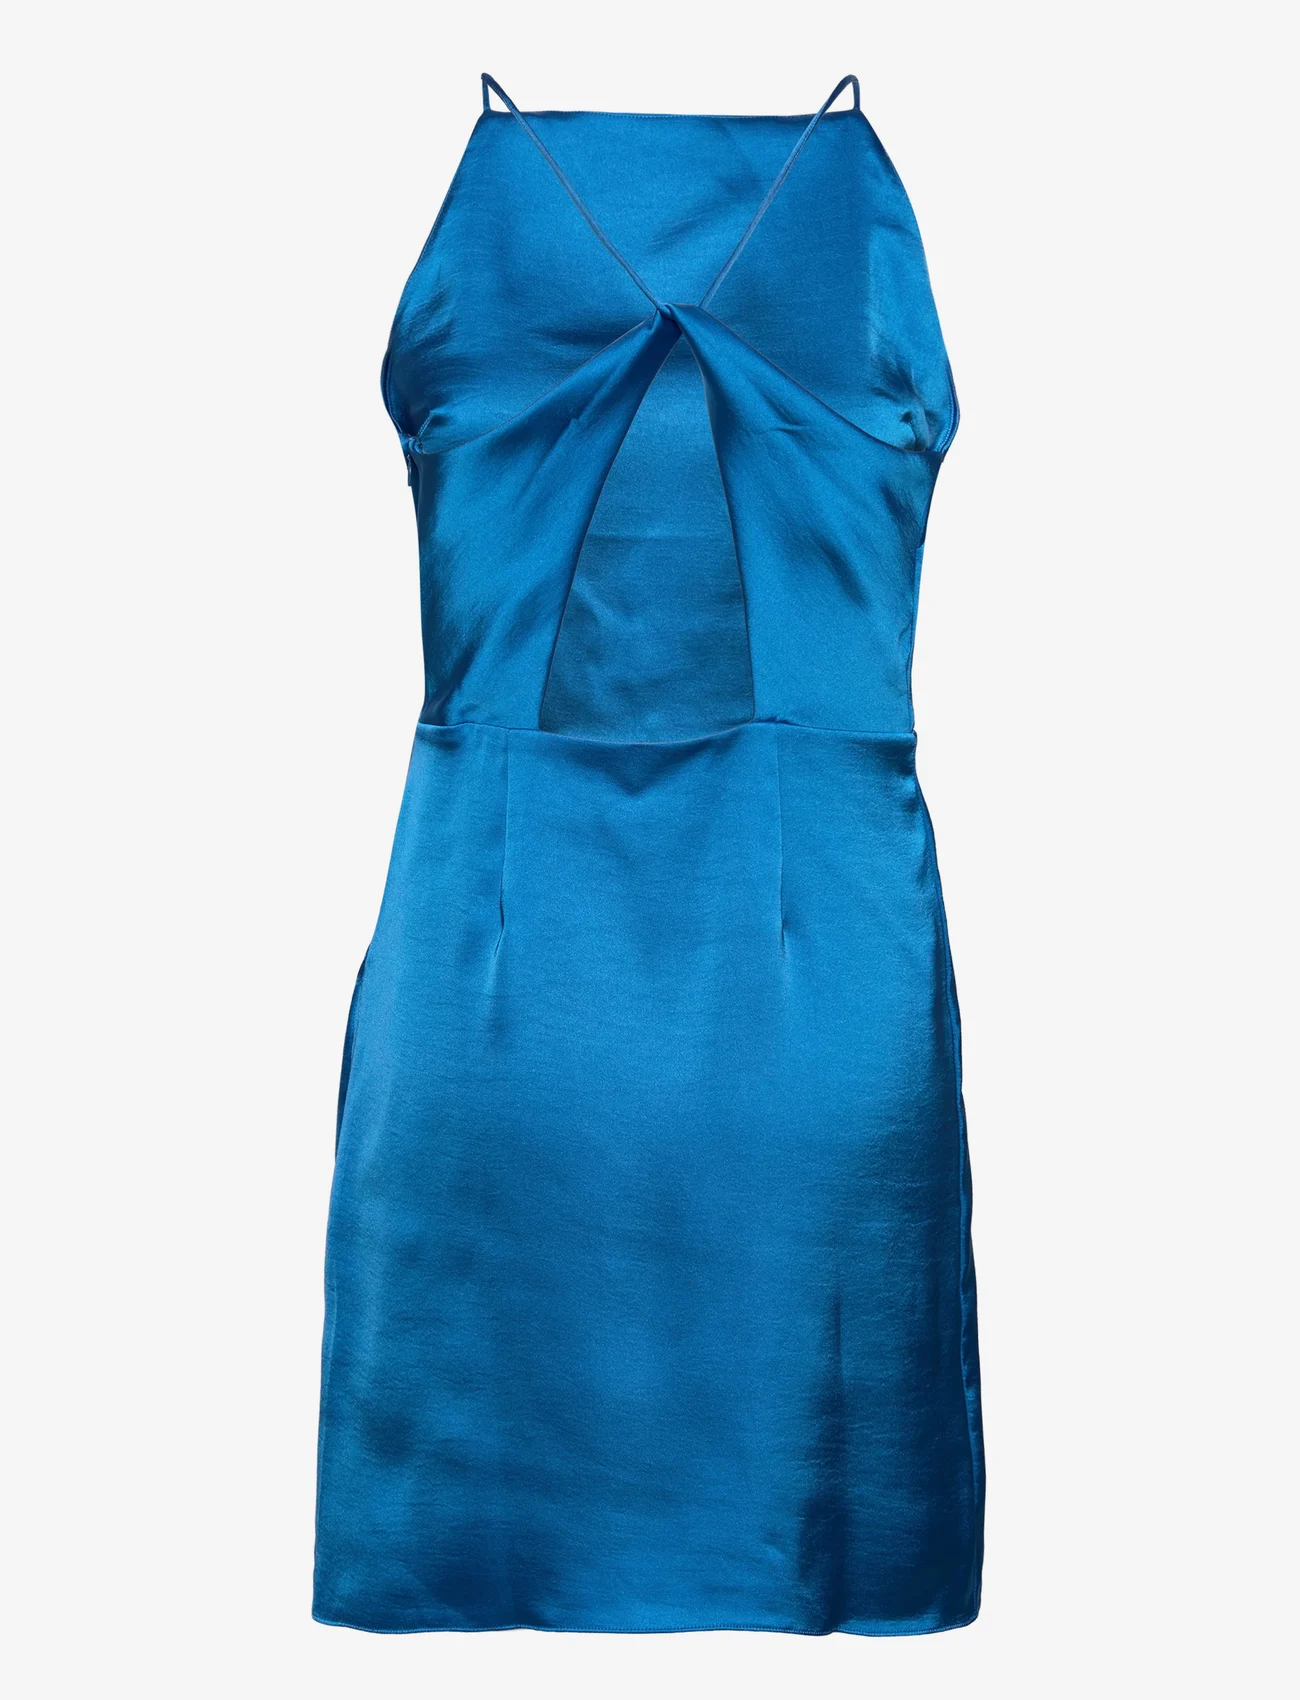 Samsøe Samsøe - Villa short dress 12956 - feestelijke kleding voor outlet-prijzen - ibiza blue - 1